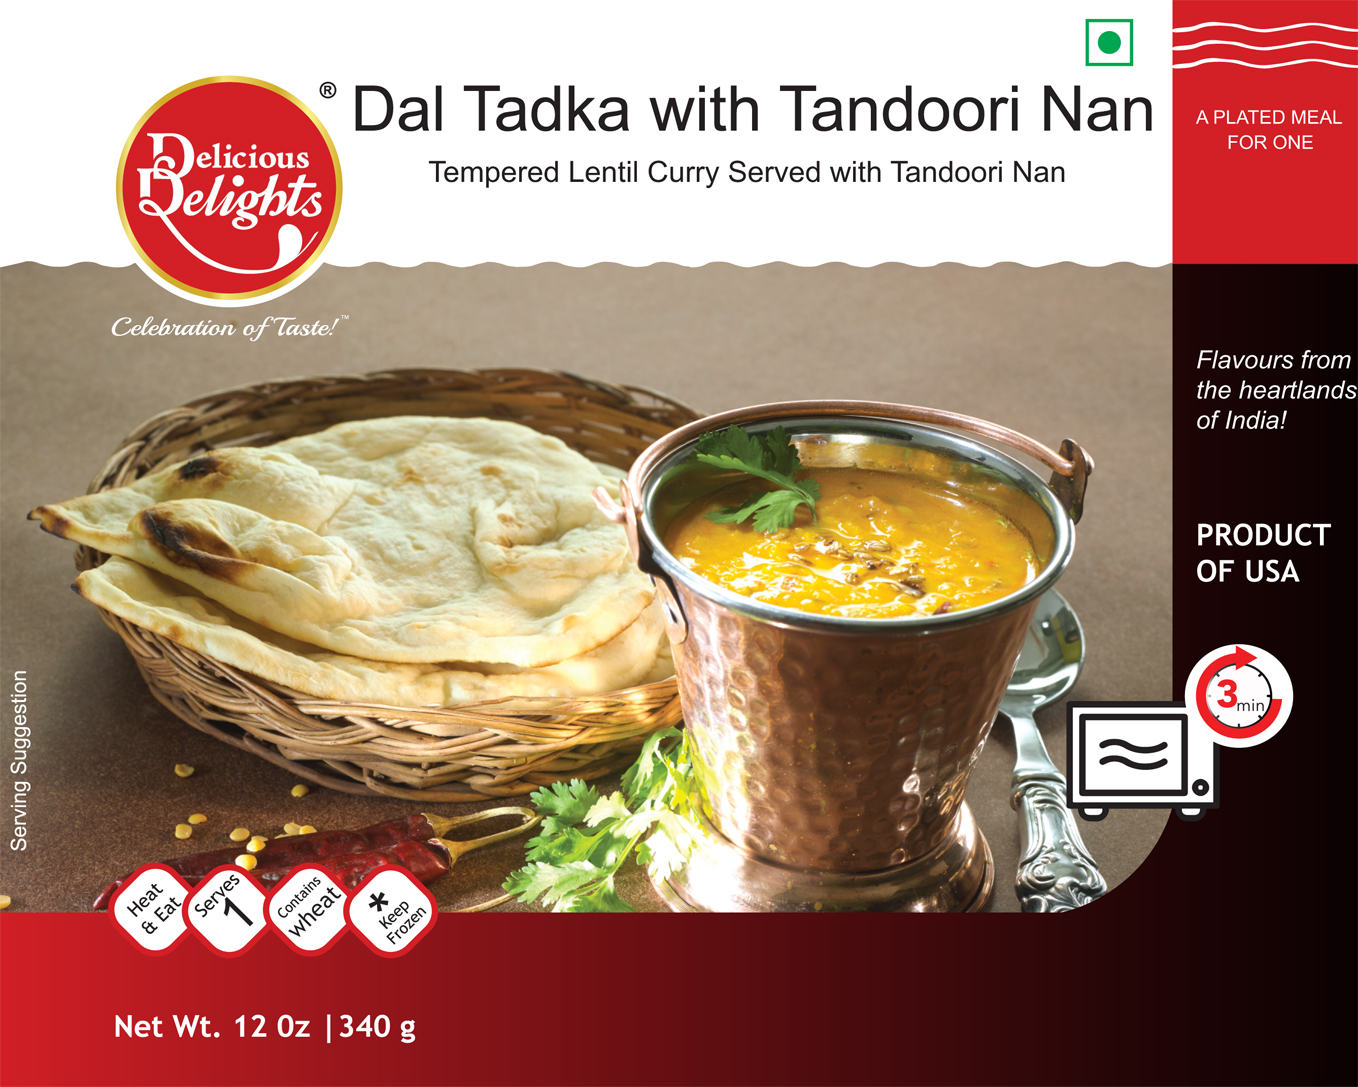 Delicious Delights Dal Tadka with Tandoori Nan